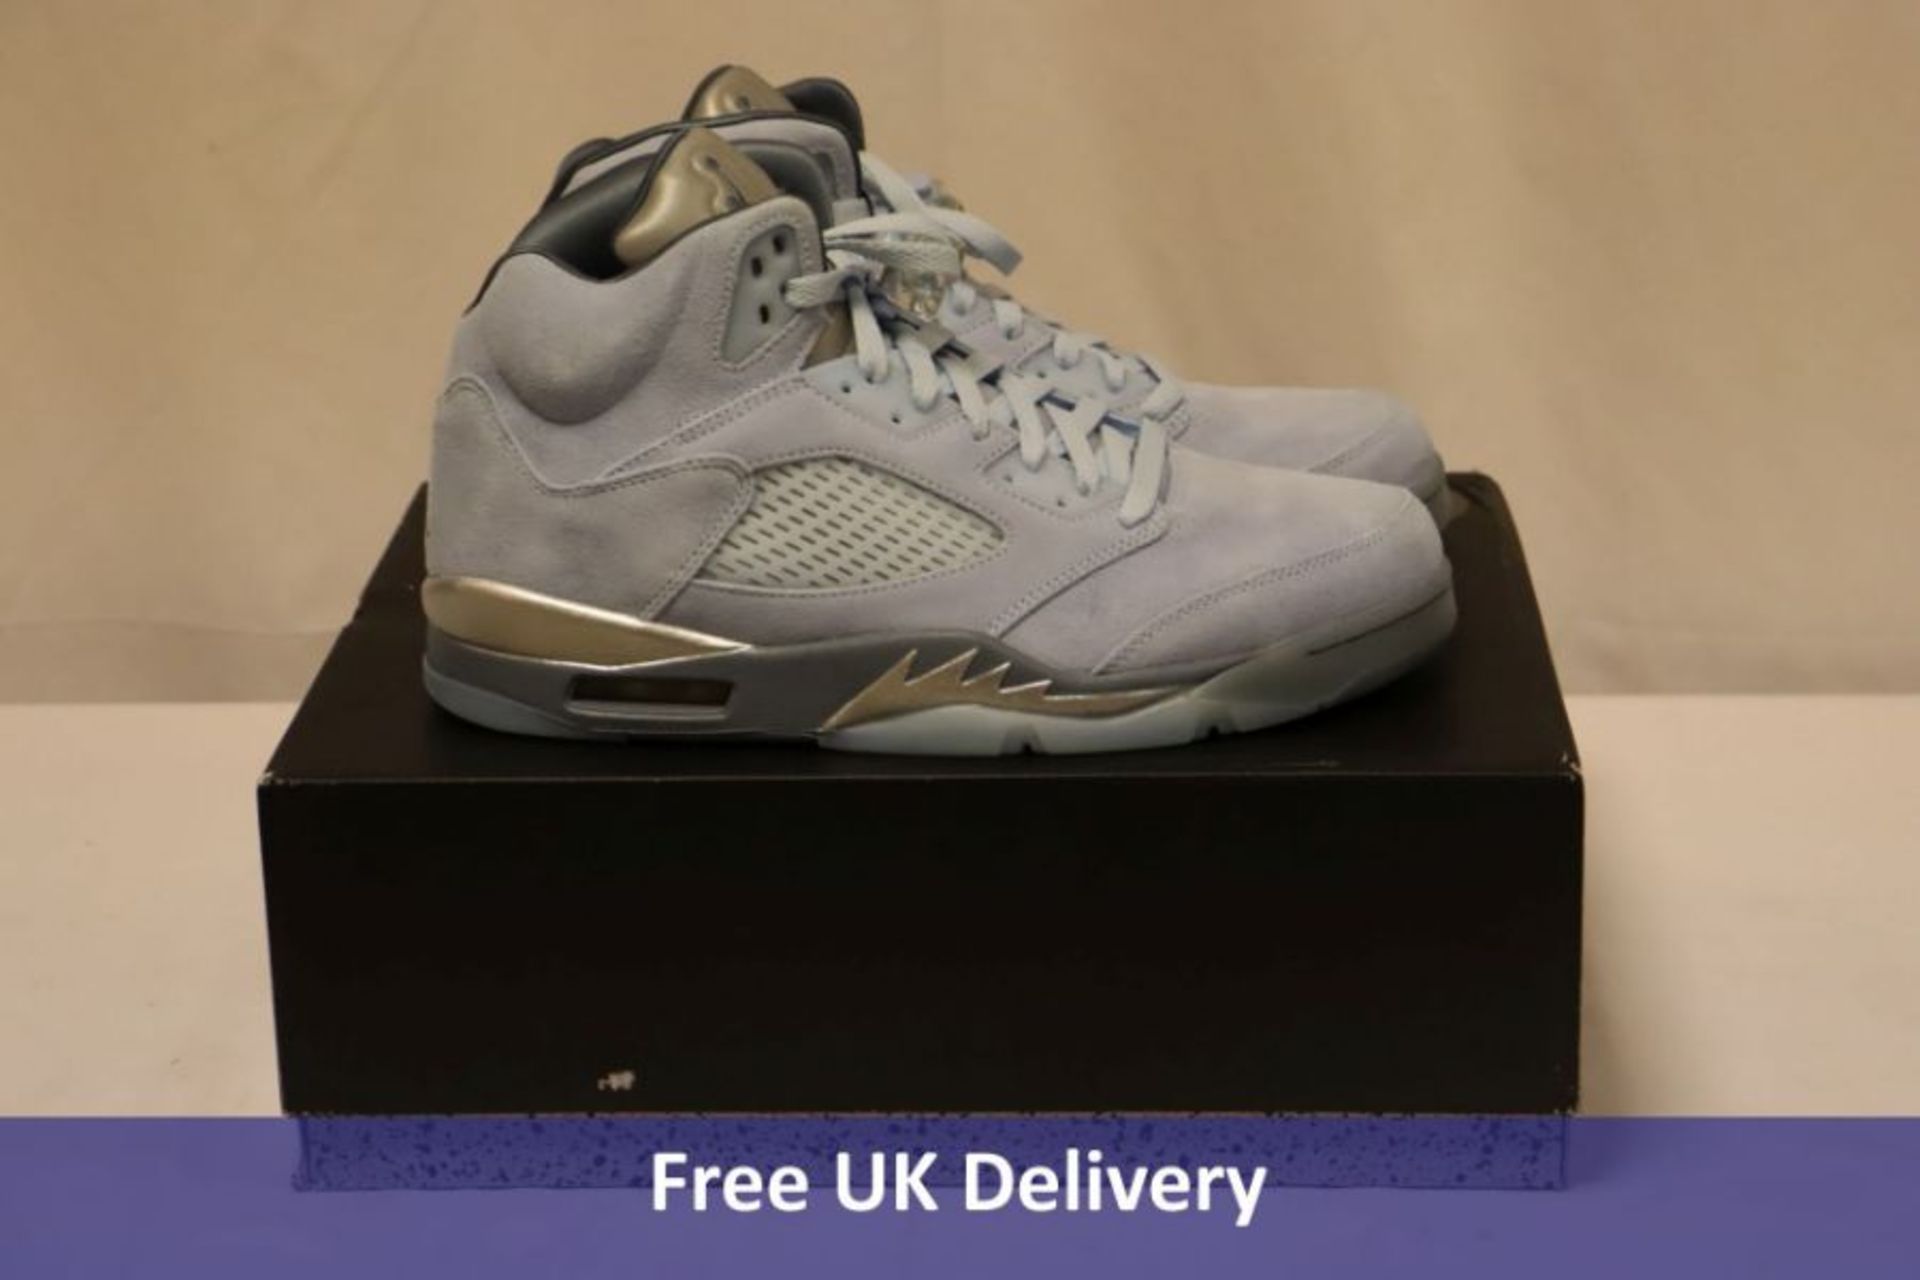 Nike Women's Air Jordan 5 Retro Trainers, Ice/Blue Graphite, UK 9.5. Box damaged